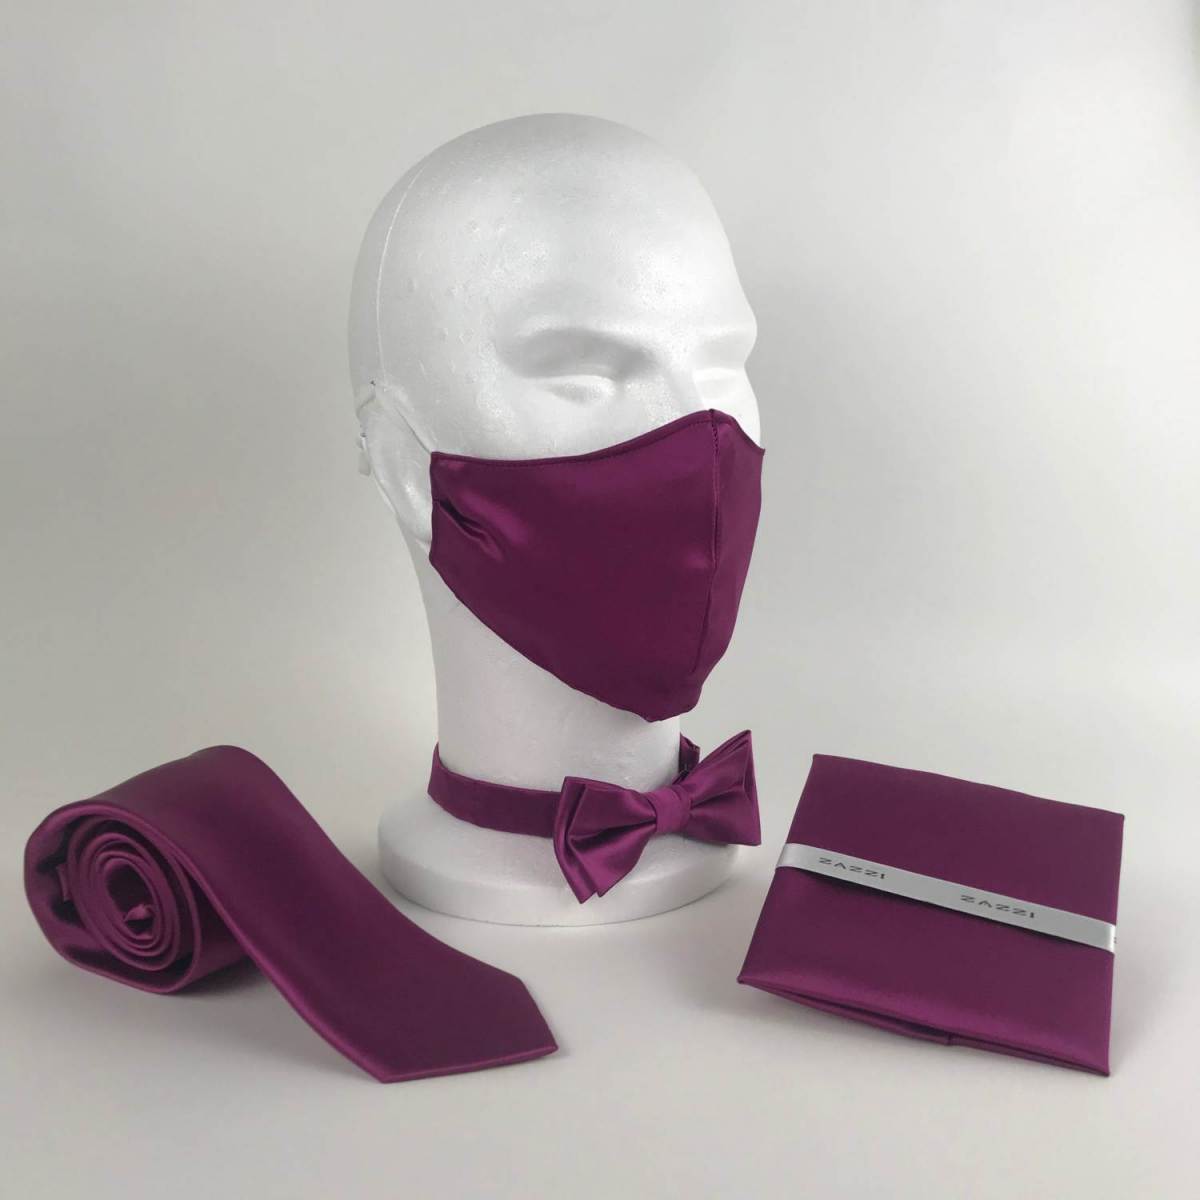 B1764 15 Magenta. mens ties facemasks con murphys menswear cork scaled - - Con Murphys Menswear